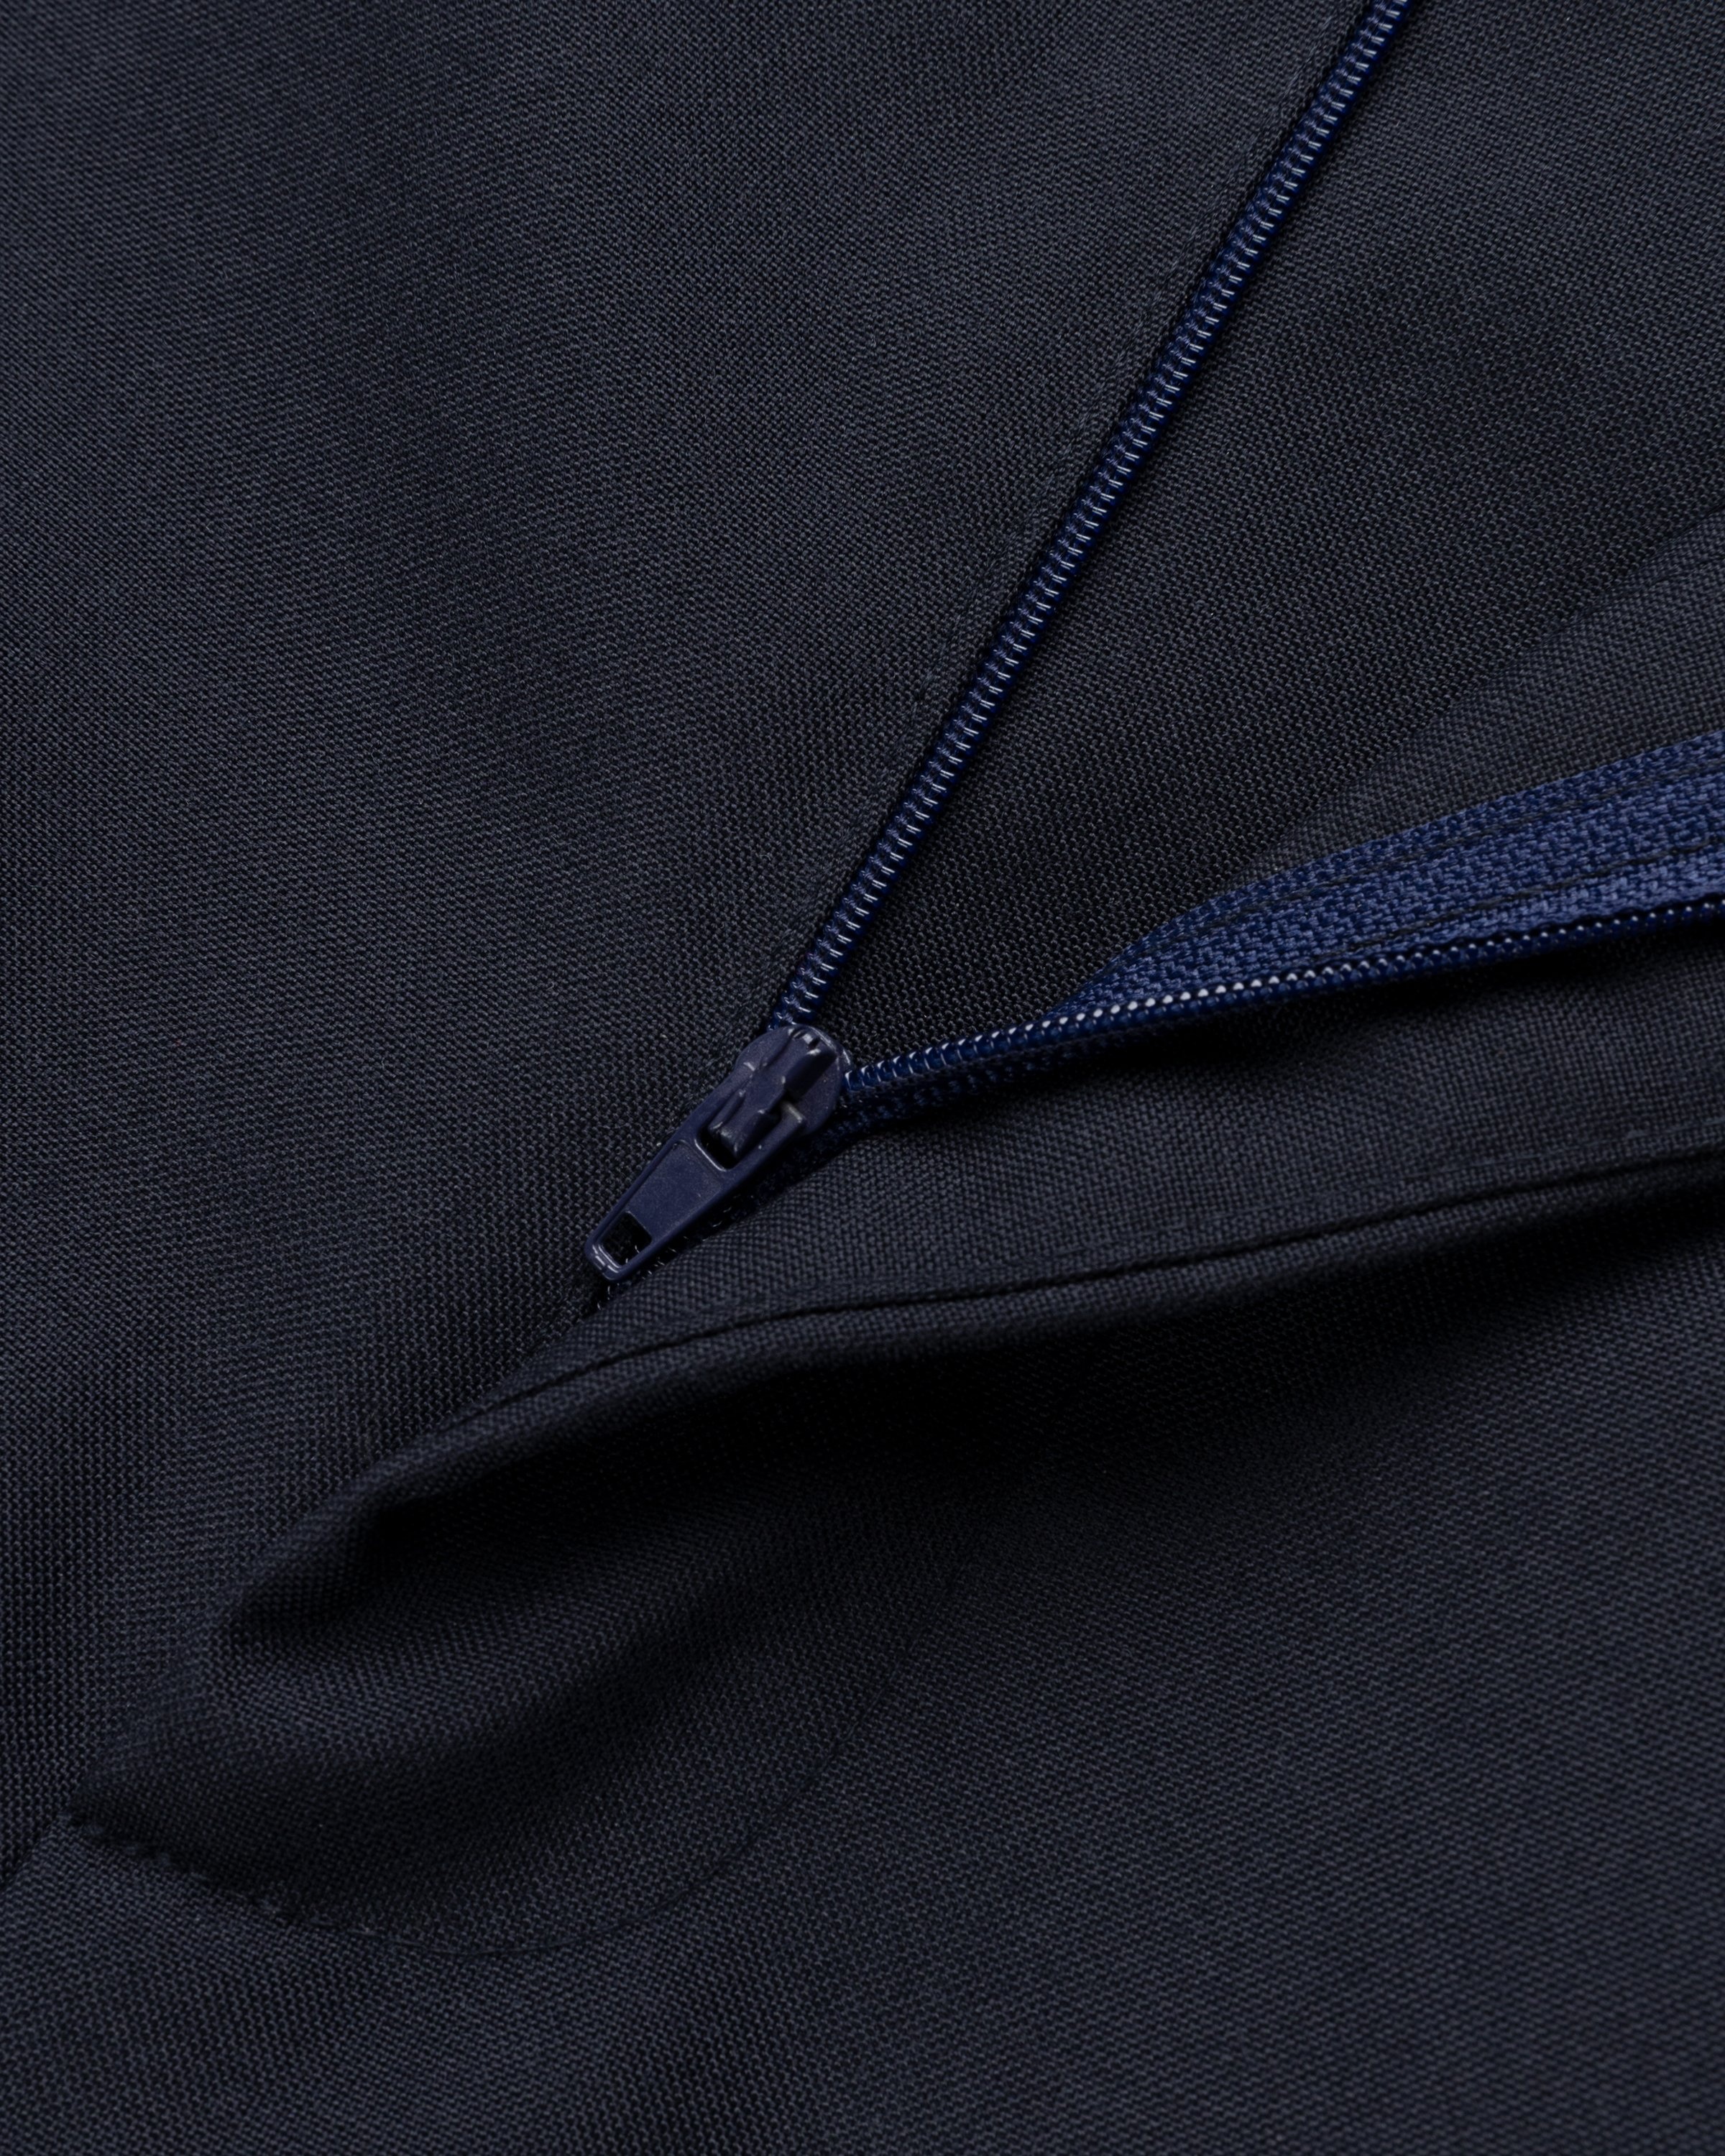 Winnie New York – Pleated Wool Trousers Navy - Pants - Blue - Image 6